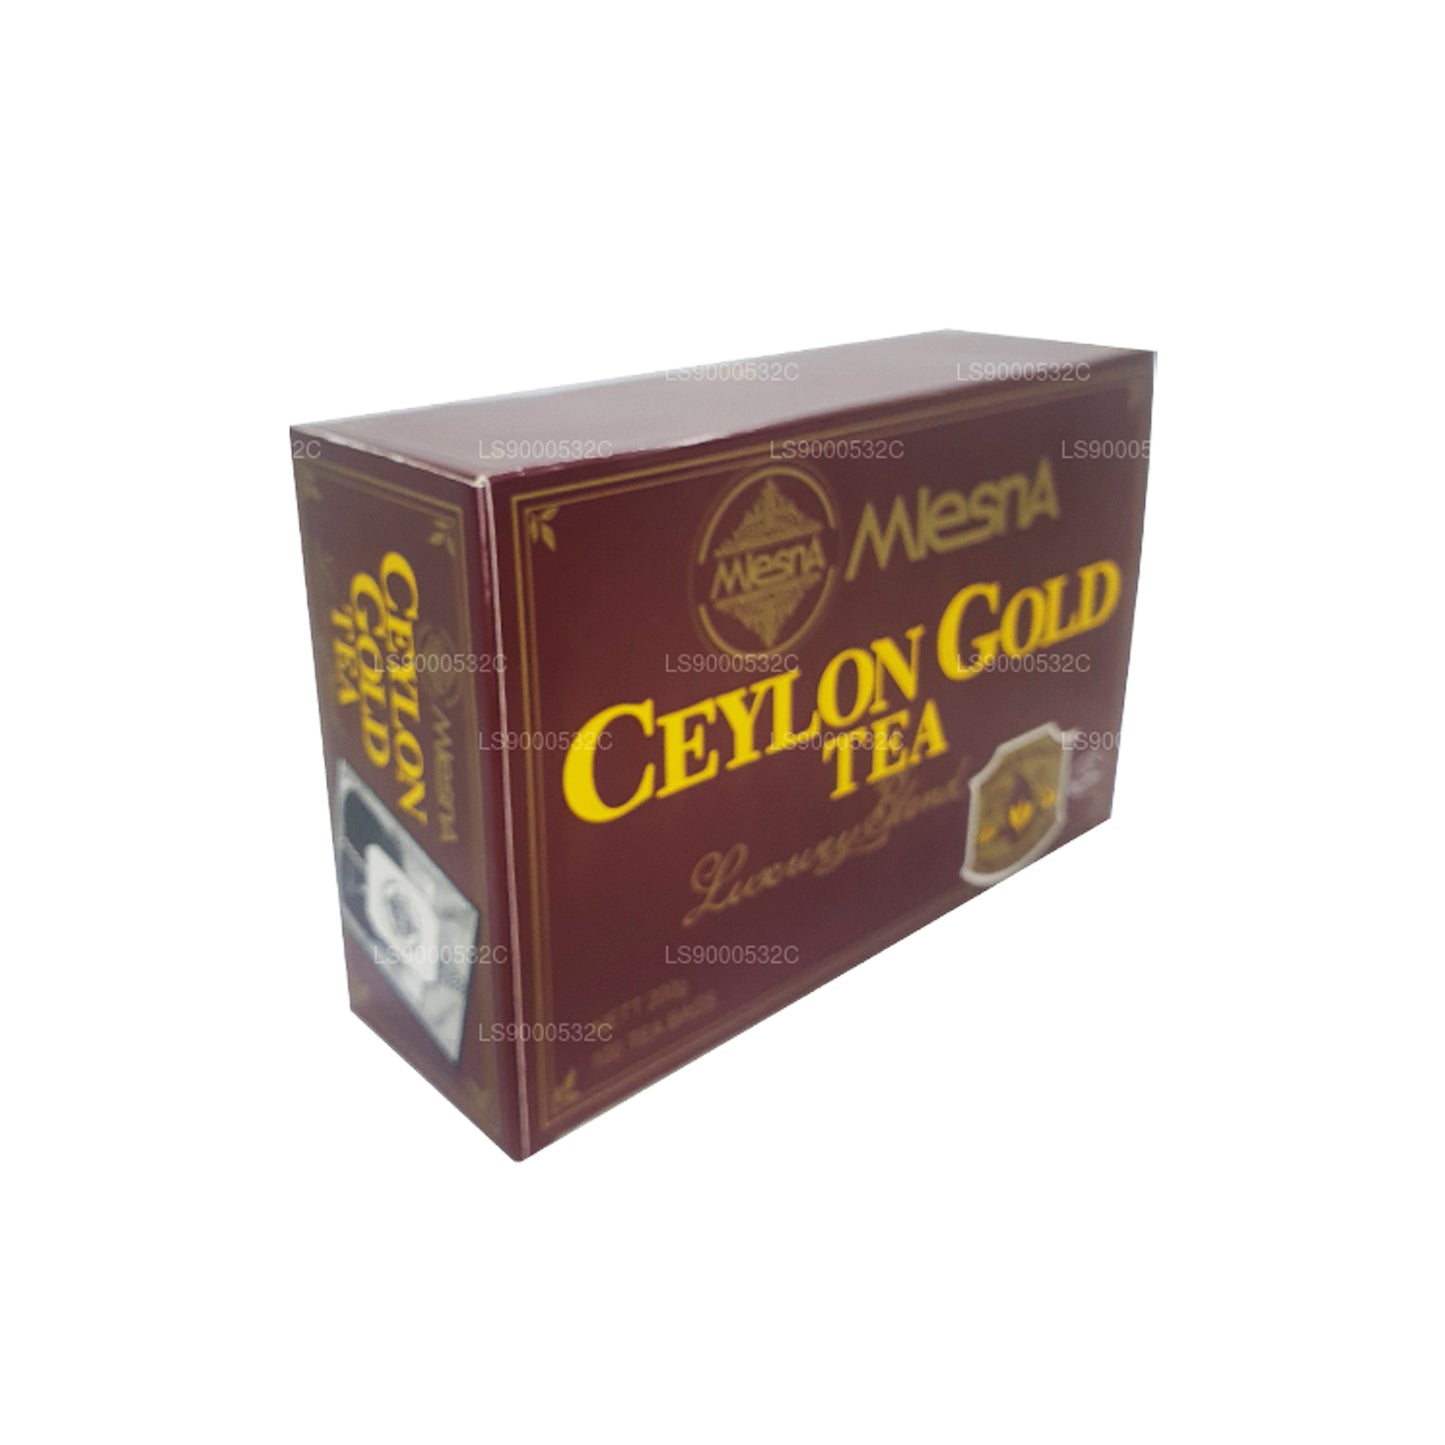 Mlesna Tea Ceylon Gold 100 torebek (200g) String and Tag